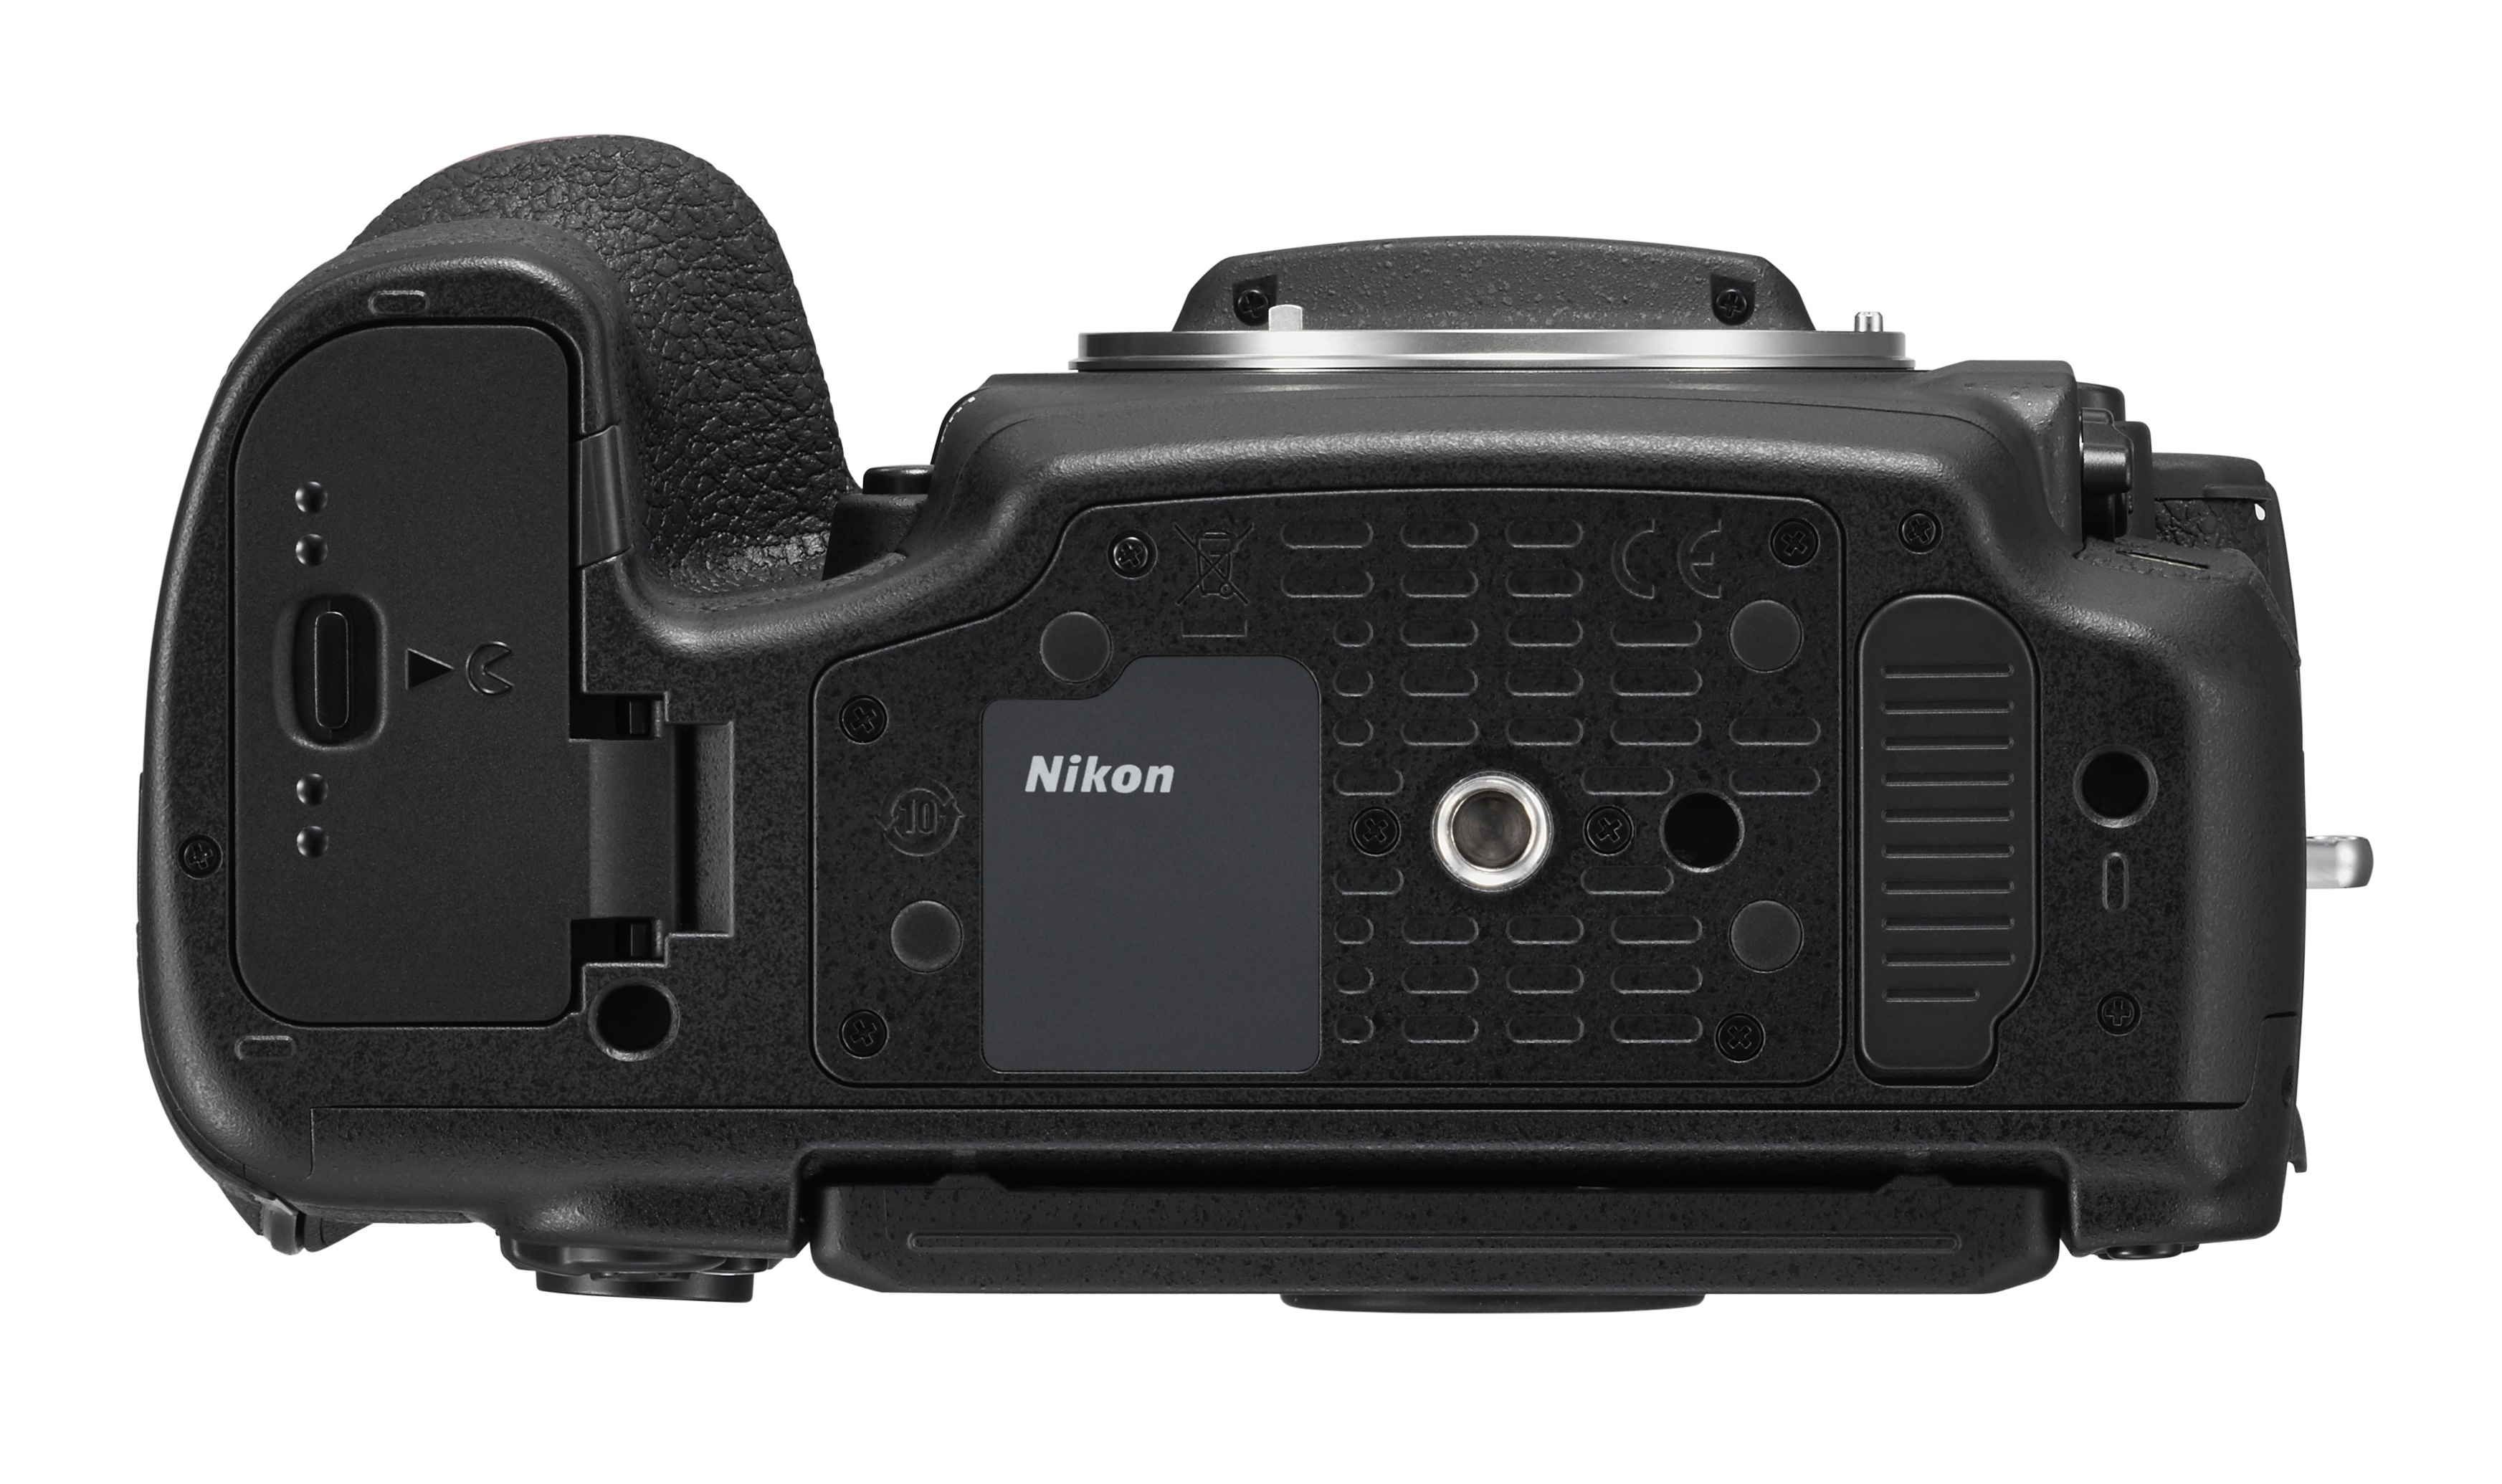 NIKON D850 Body Spiegelreflexkamera, 45,7 Schwarz Display, WLAN, Touchscreen Megapixel